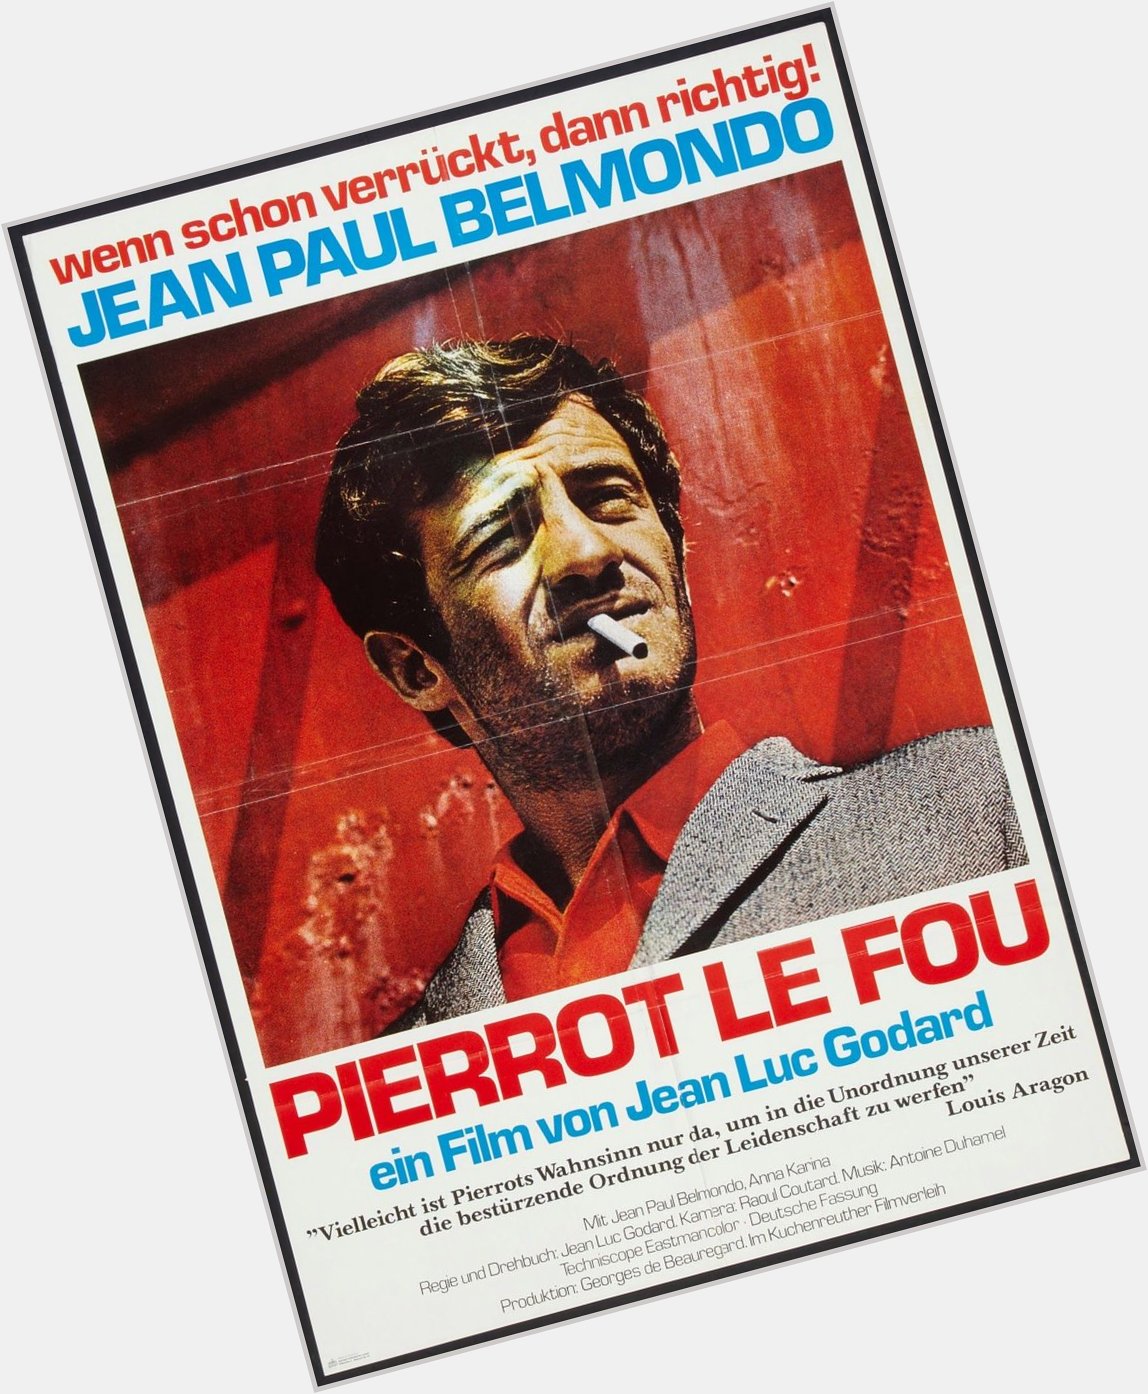 Happy birthday to the great 
Jean-Paul Belmondo - PIERROT LE FOU - 1965 - German release poster 